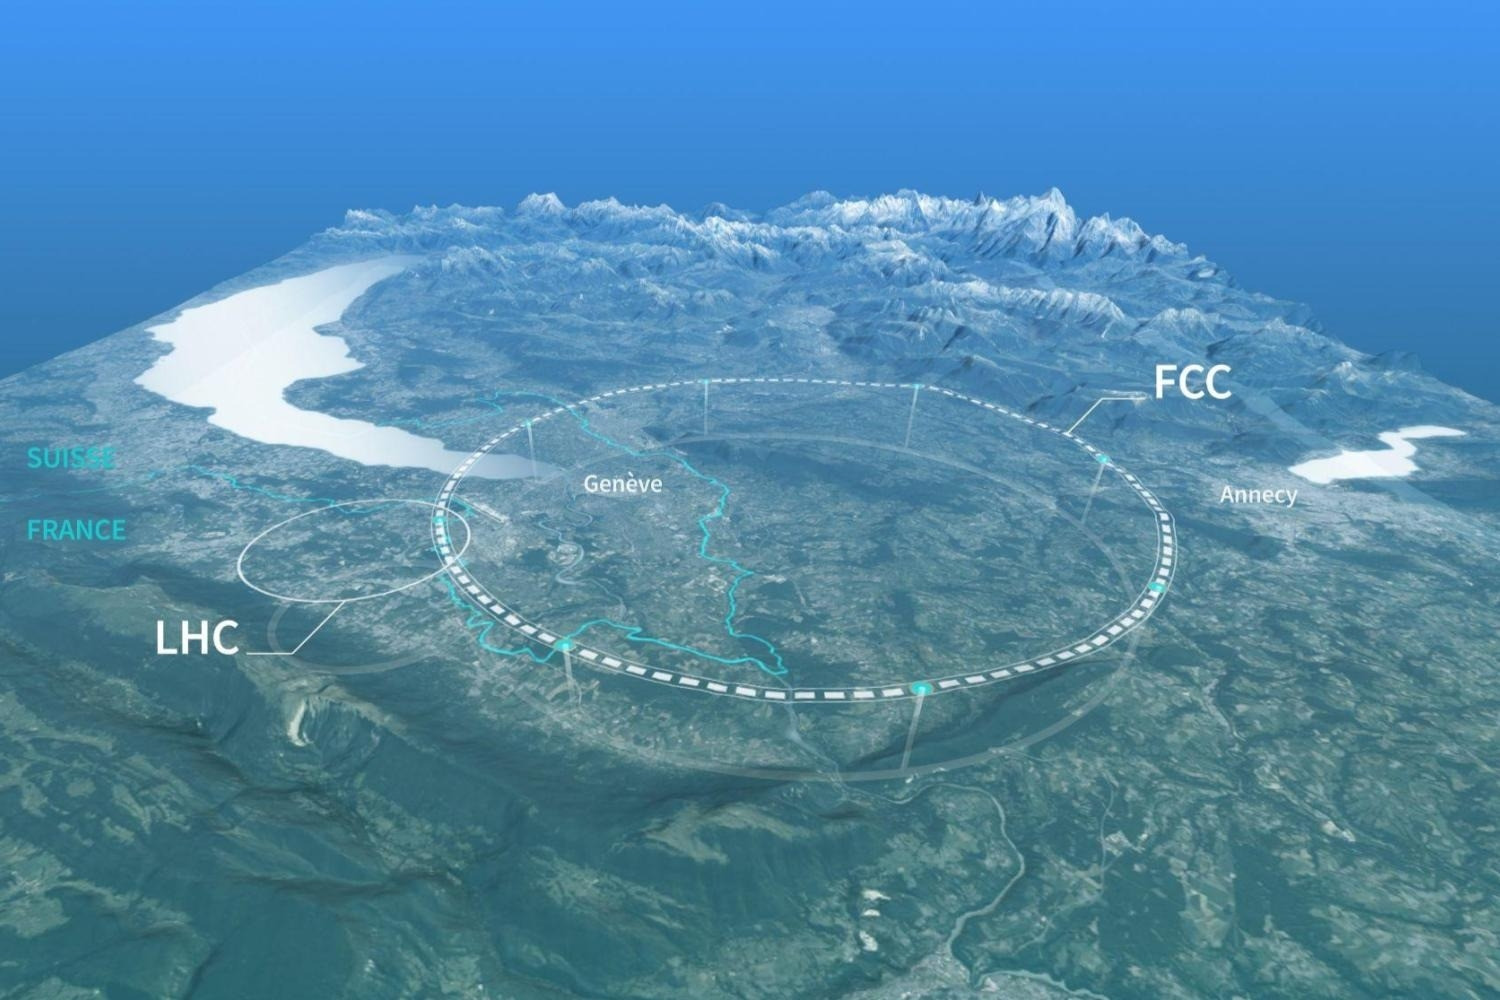 FCC-CERN